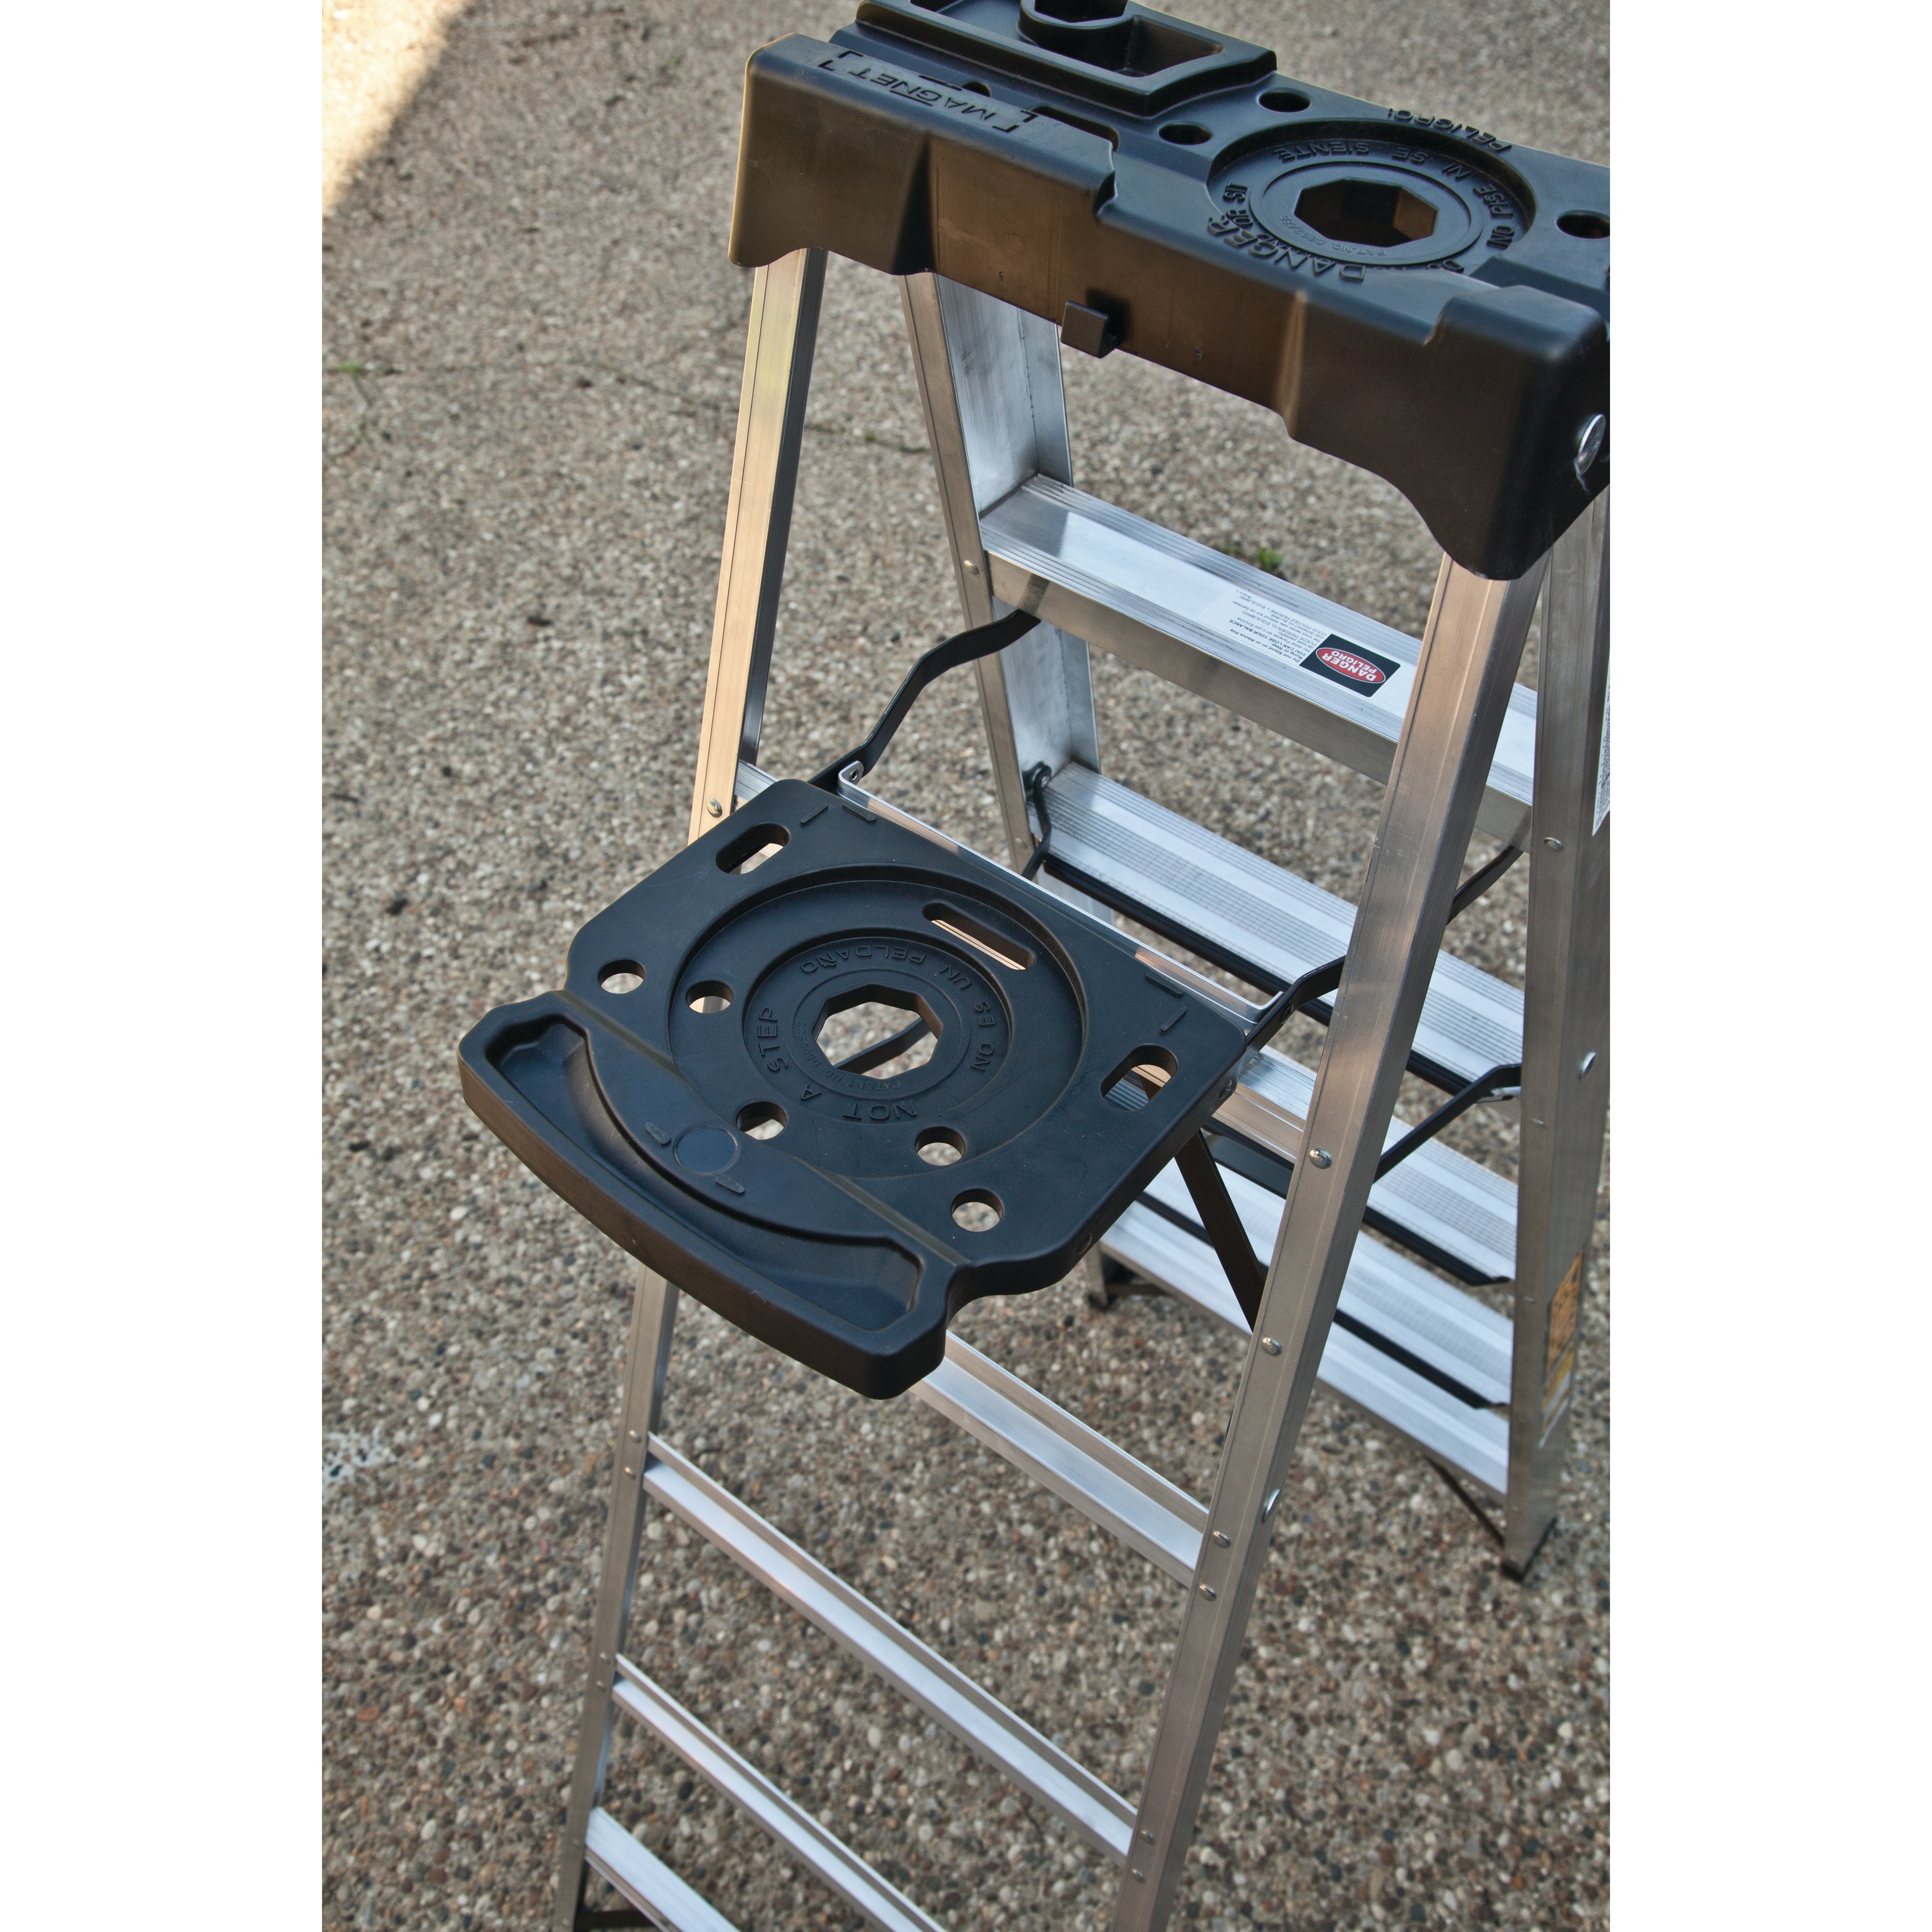 Automatic closing pail shelf feature of 10 foot Aluminum Step Ladder.